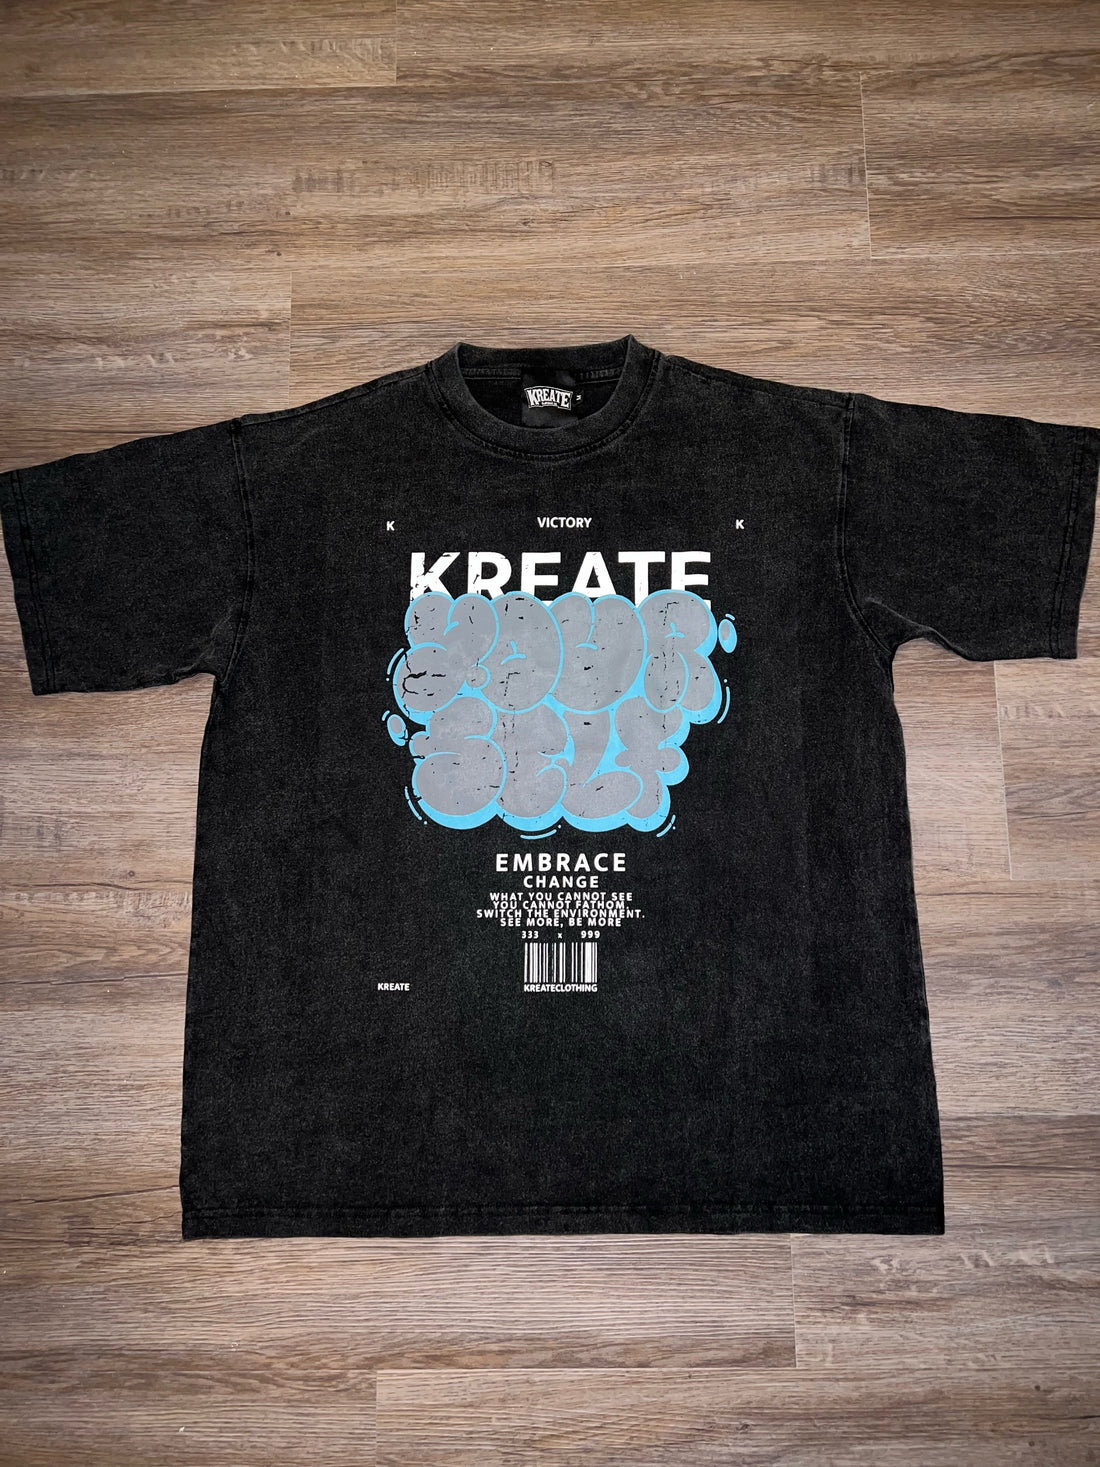 Kreate Yourself T-Shirt (Black Acid/Aqua Blue)